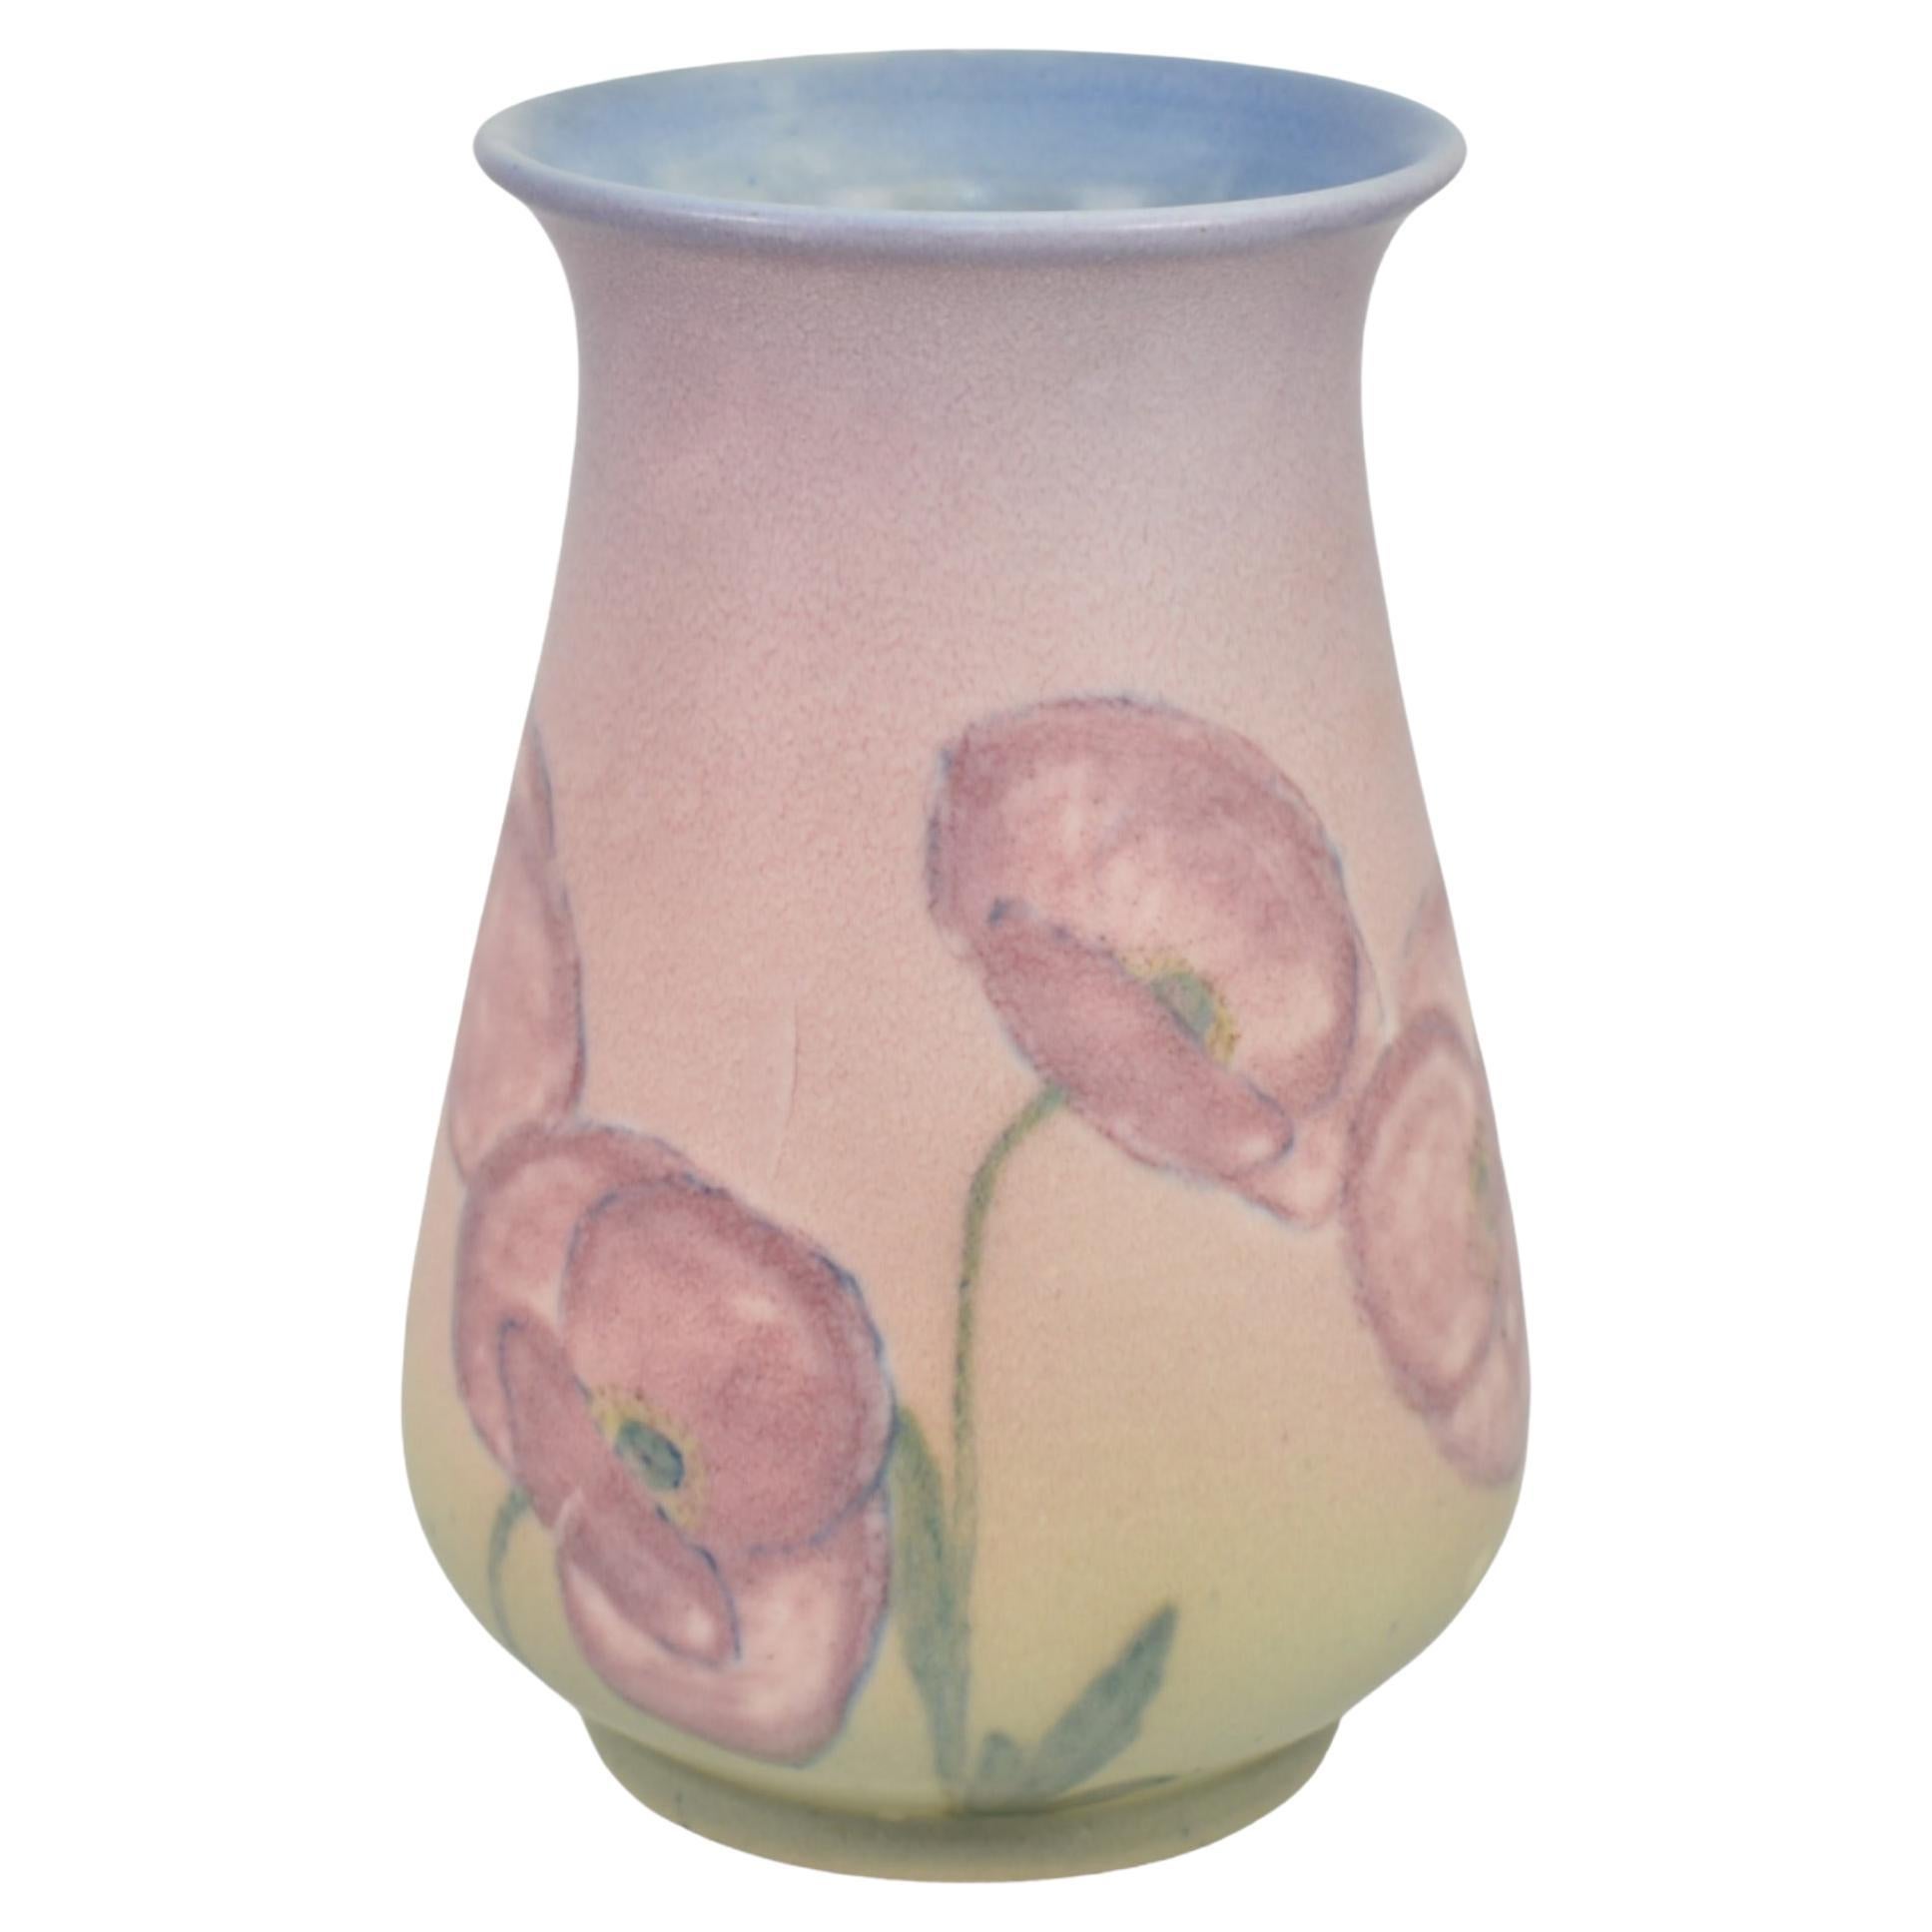 Rookwood Pottery Co. Vasen und Gefäße